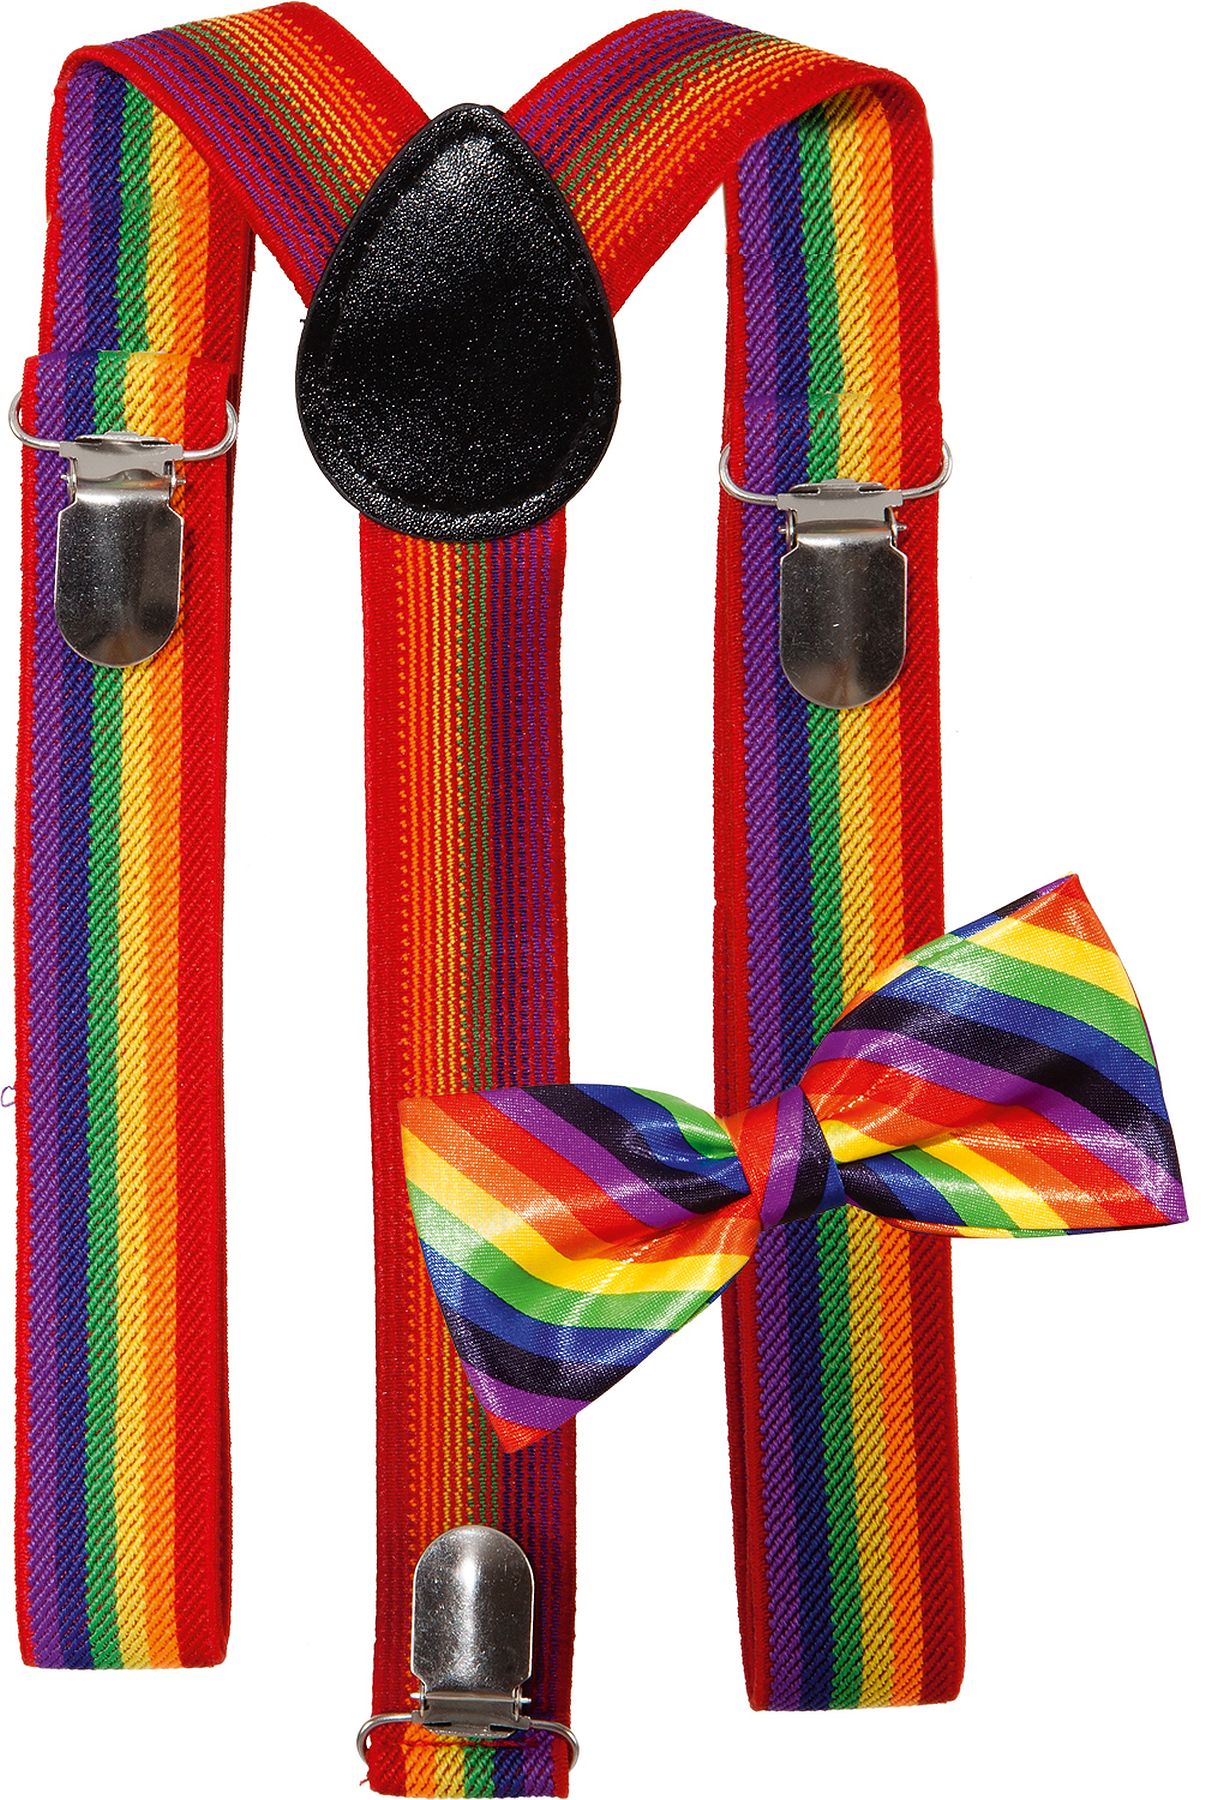 Suspenders with bow tie, rainbow